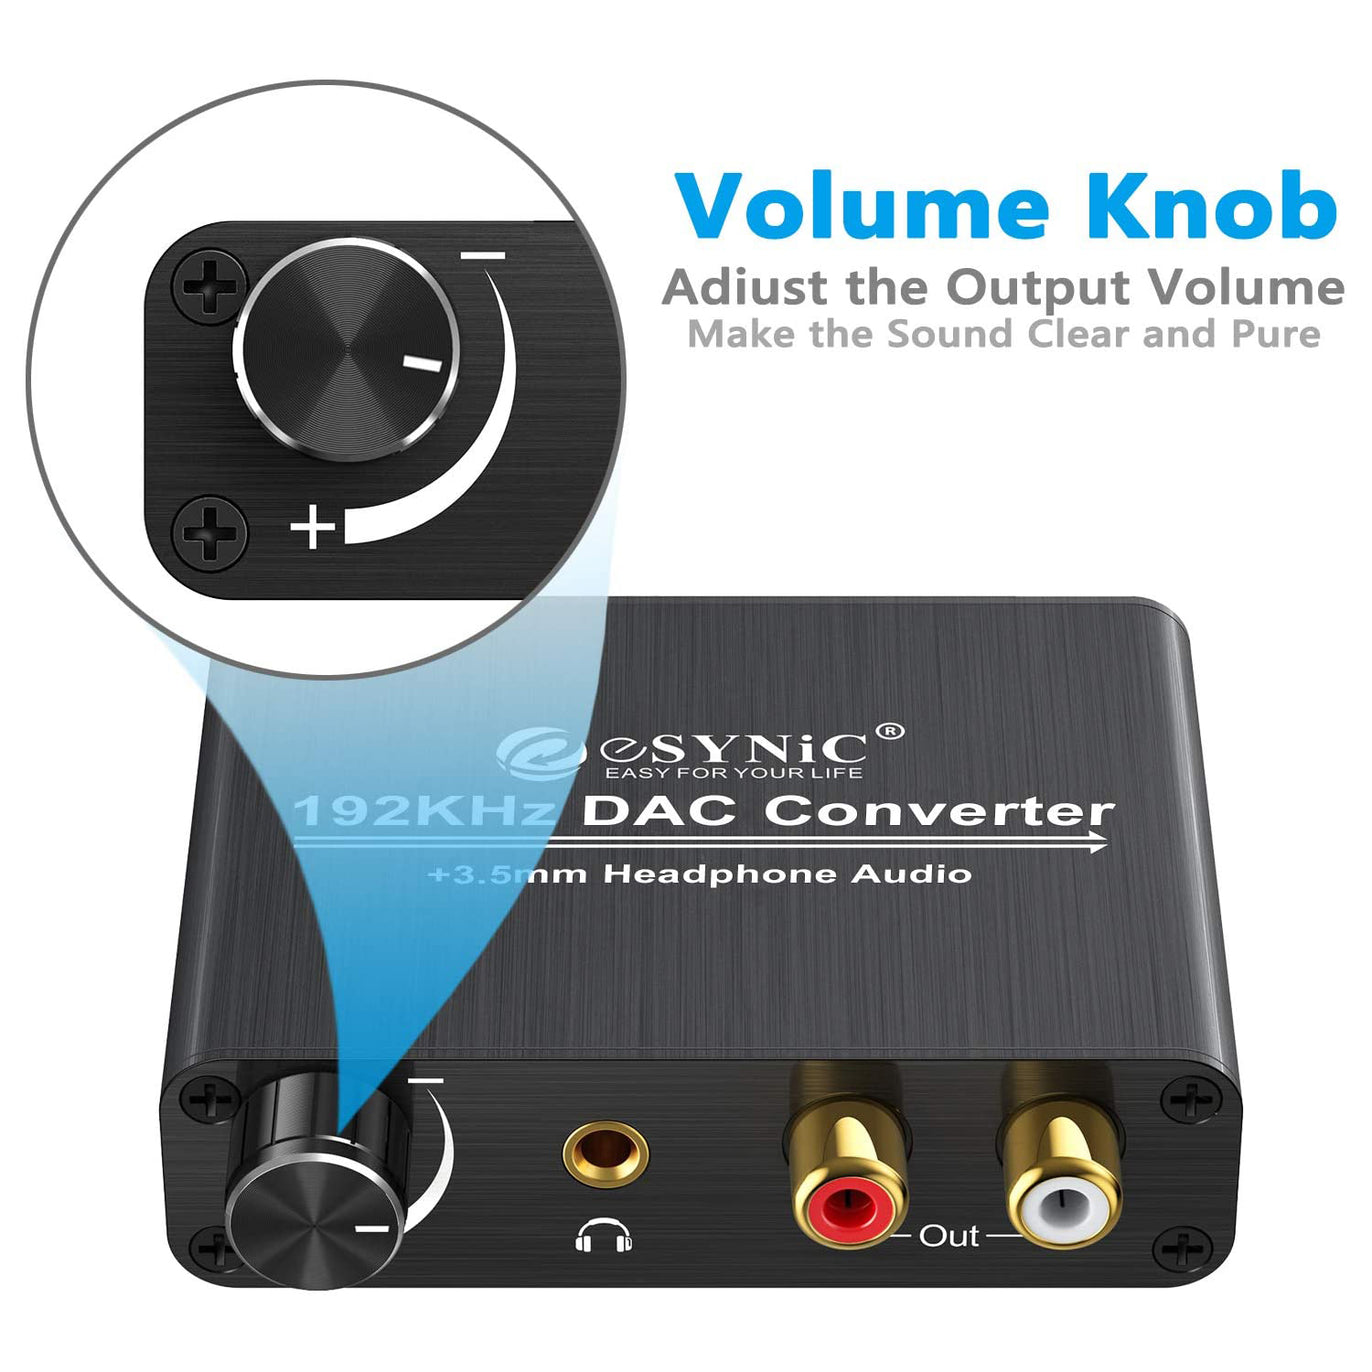 eSynic 192kHz DAC Digital to Analog Converter Volume Control